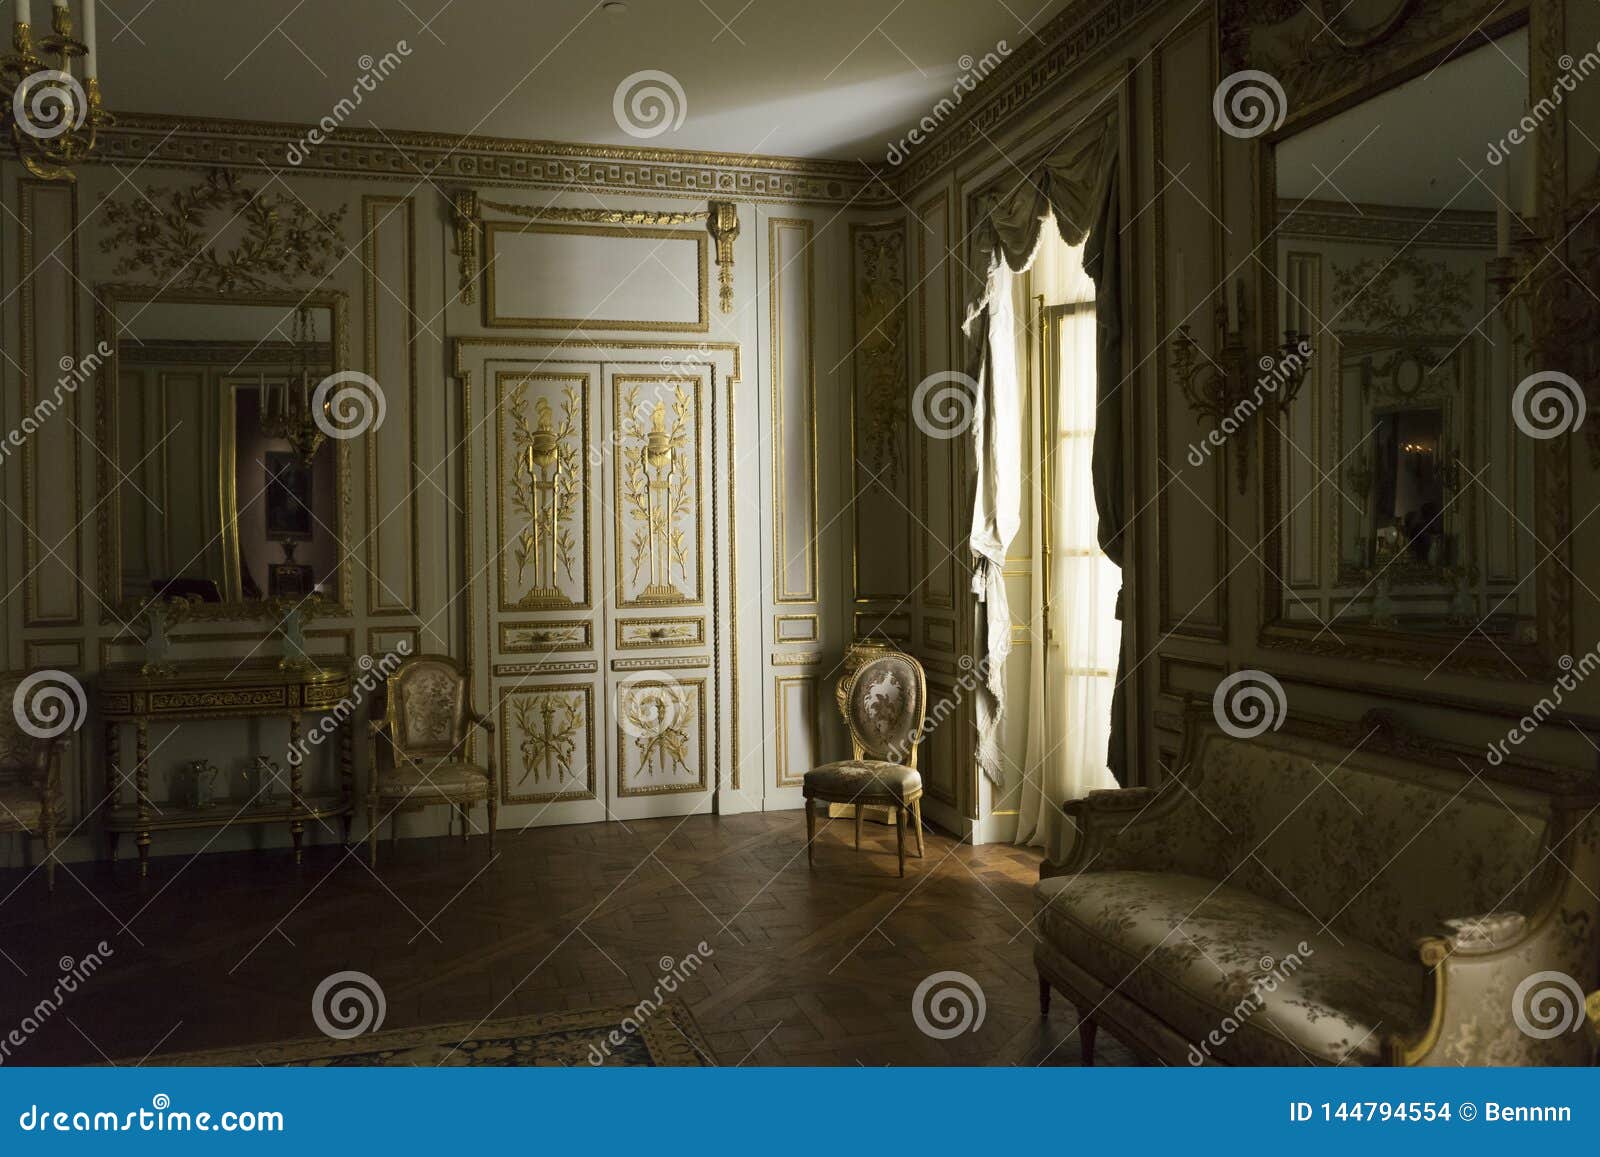 Interior View Of The Room Display Renaissance Design